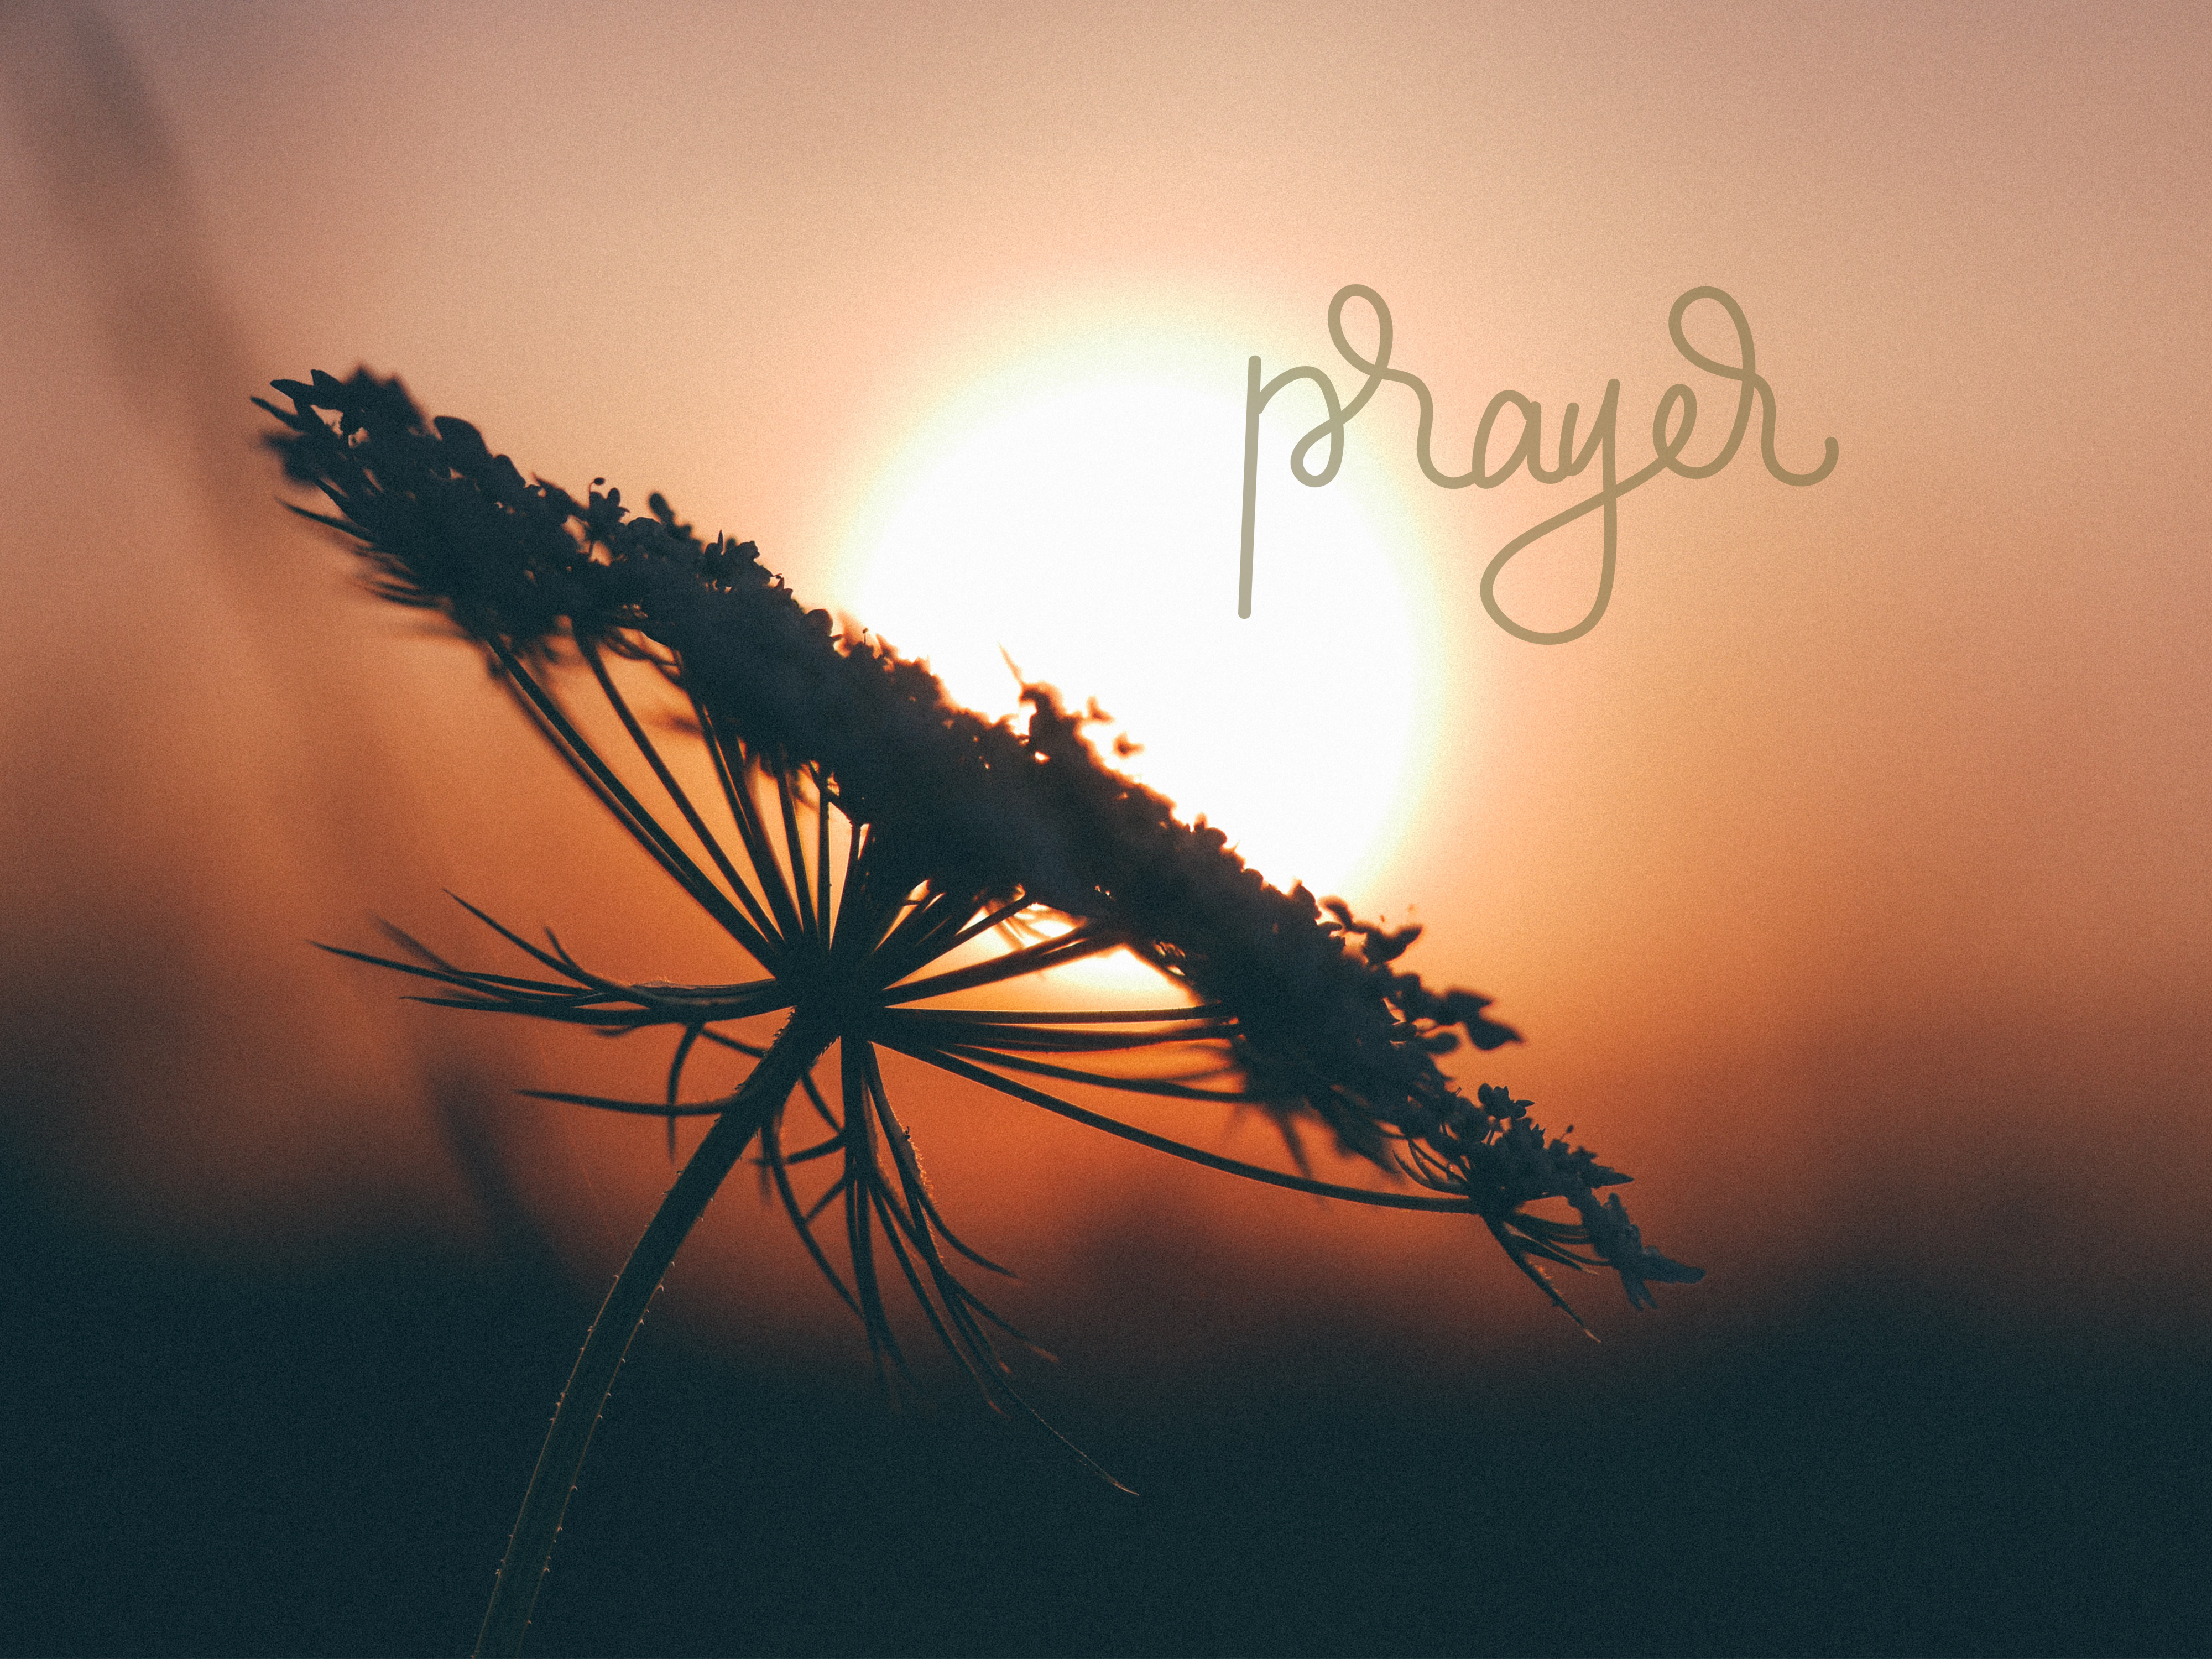 Prayer_Title